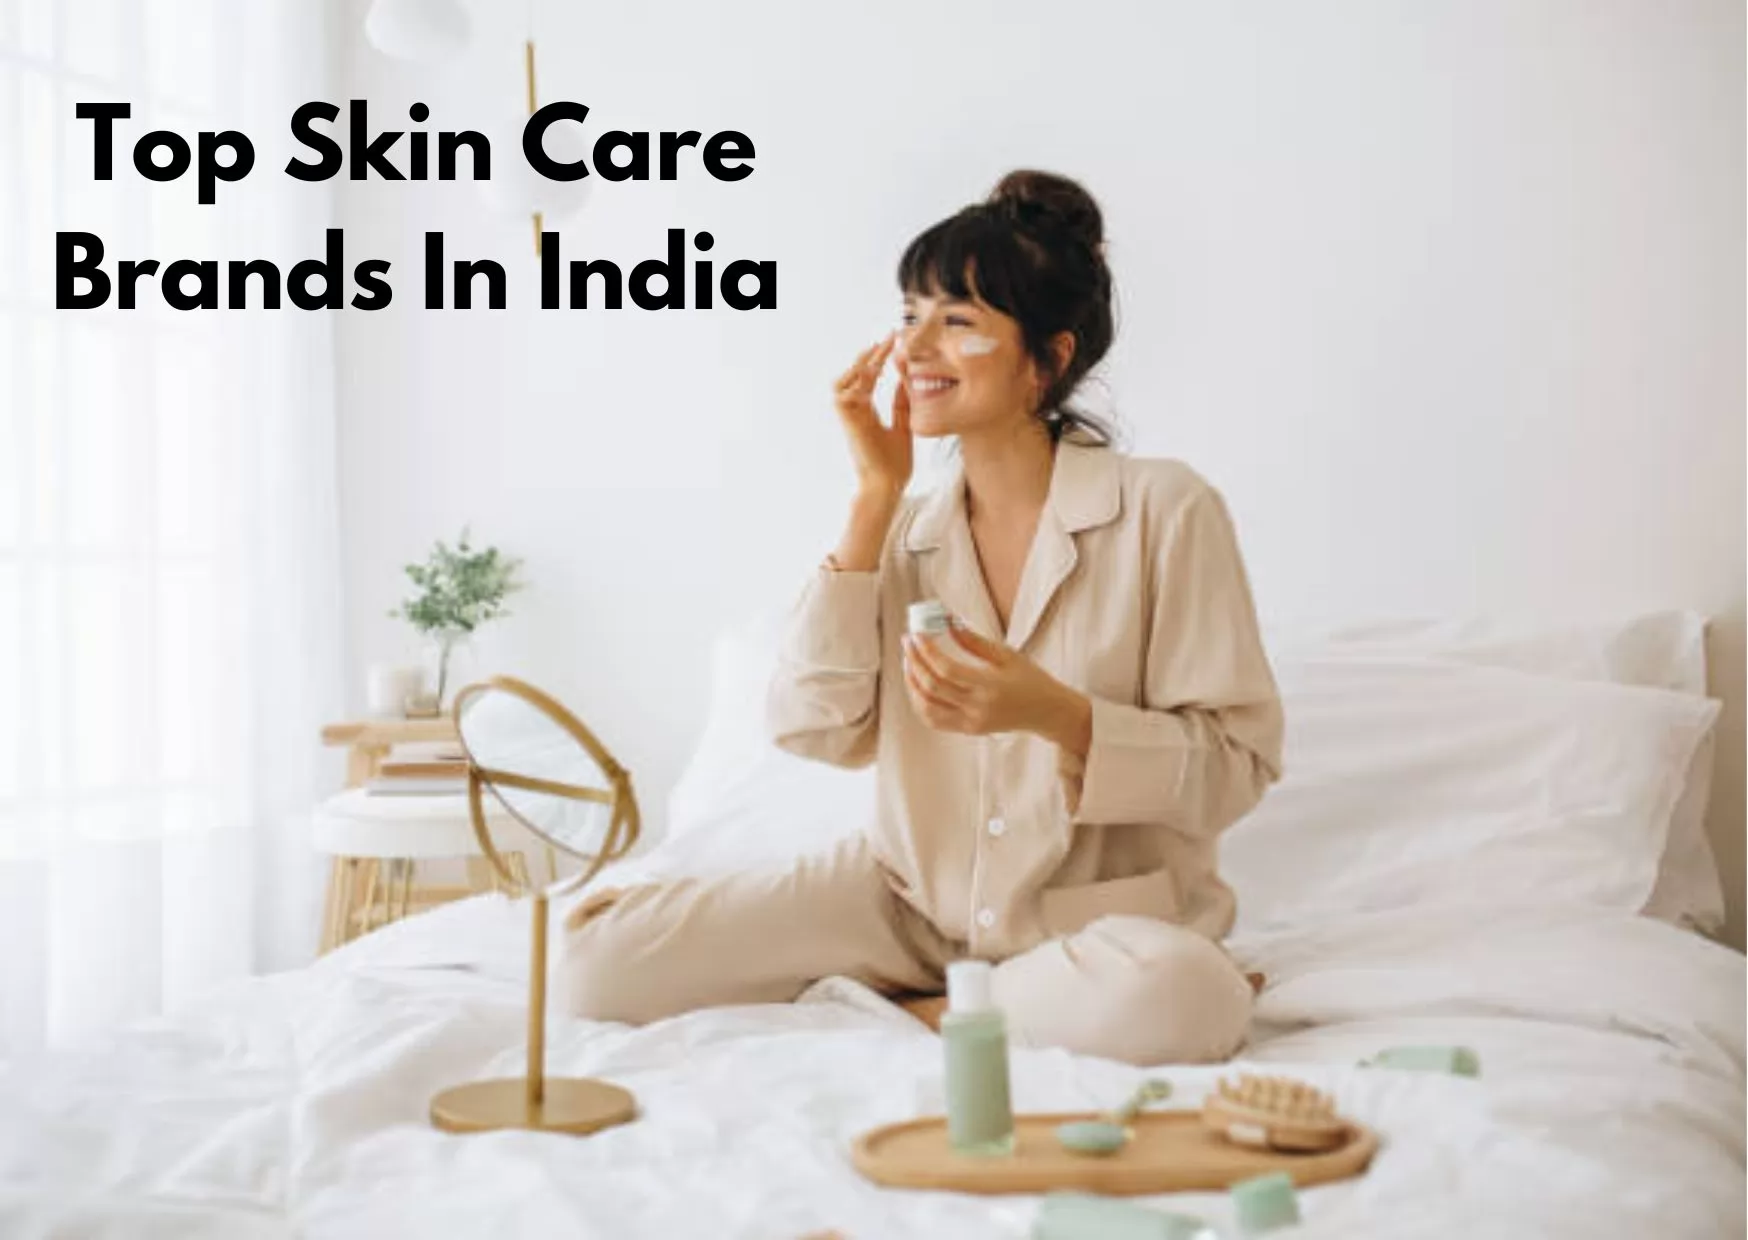 Top Skin Care Brands In India